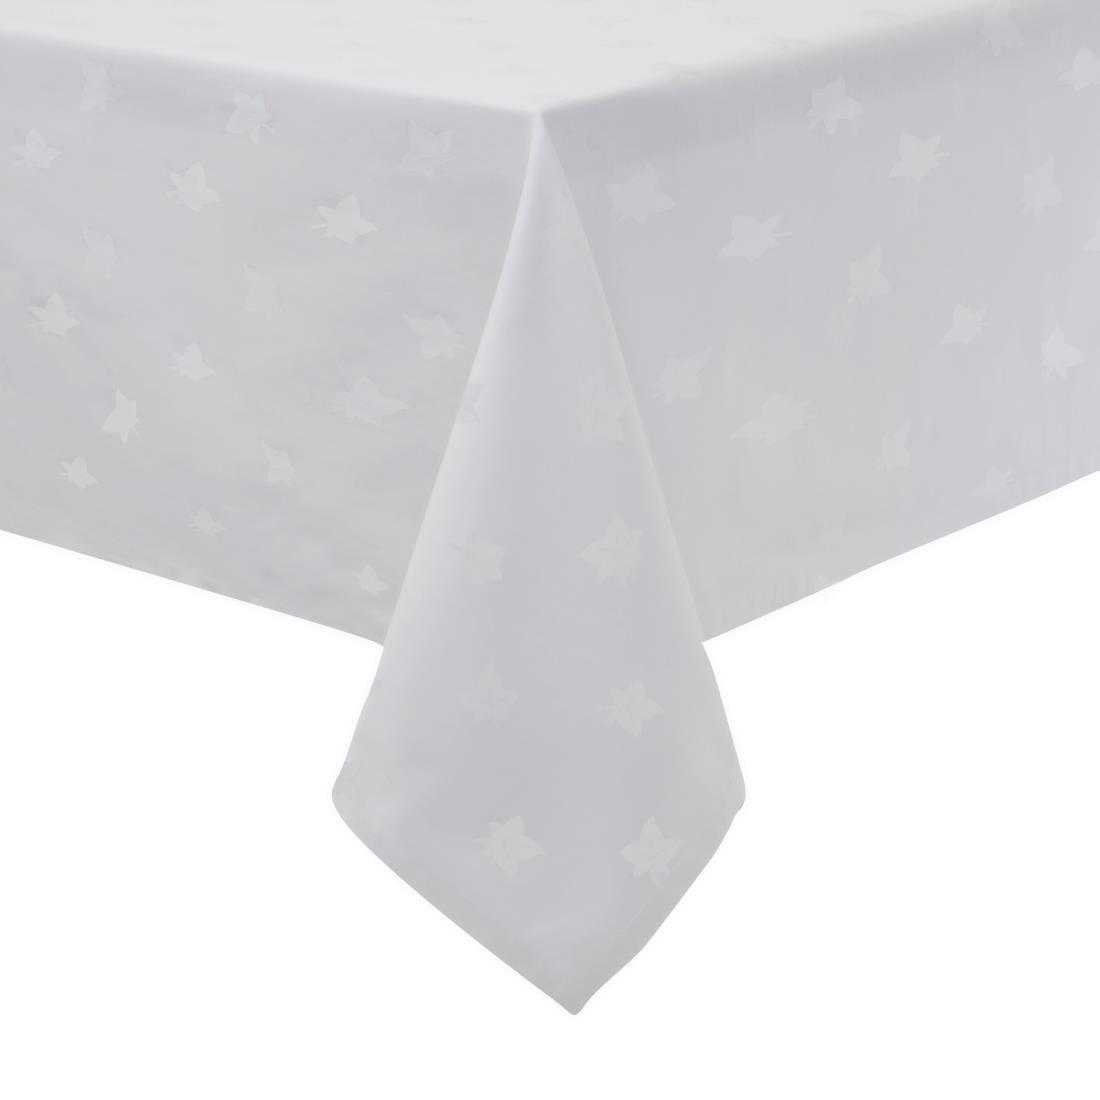 Mitre Luxury Luxor Tablecloth Ivy Leaf White 2300 x 2300mm - GW451  - 1